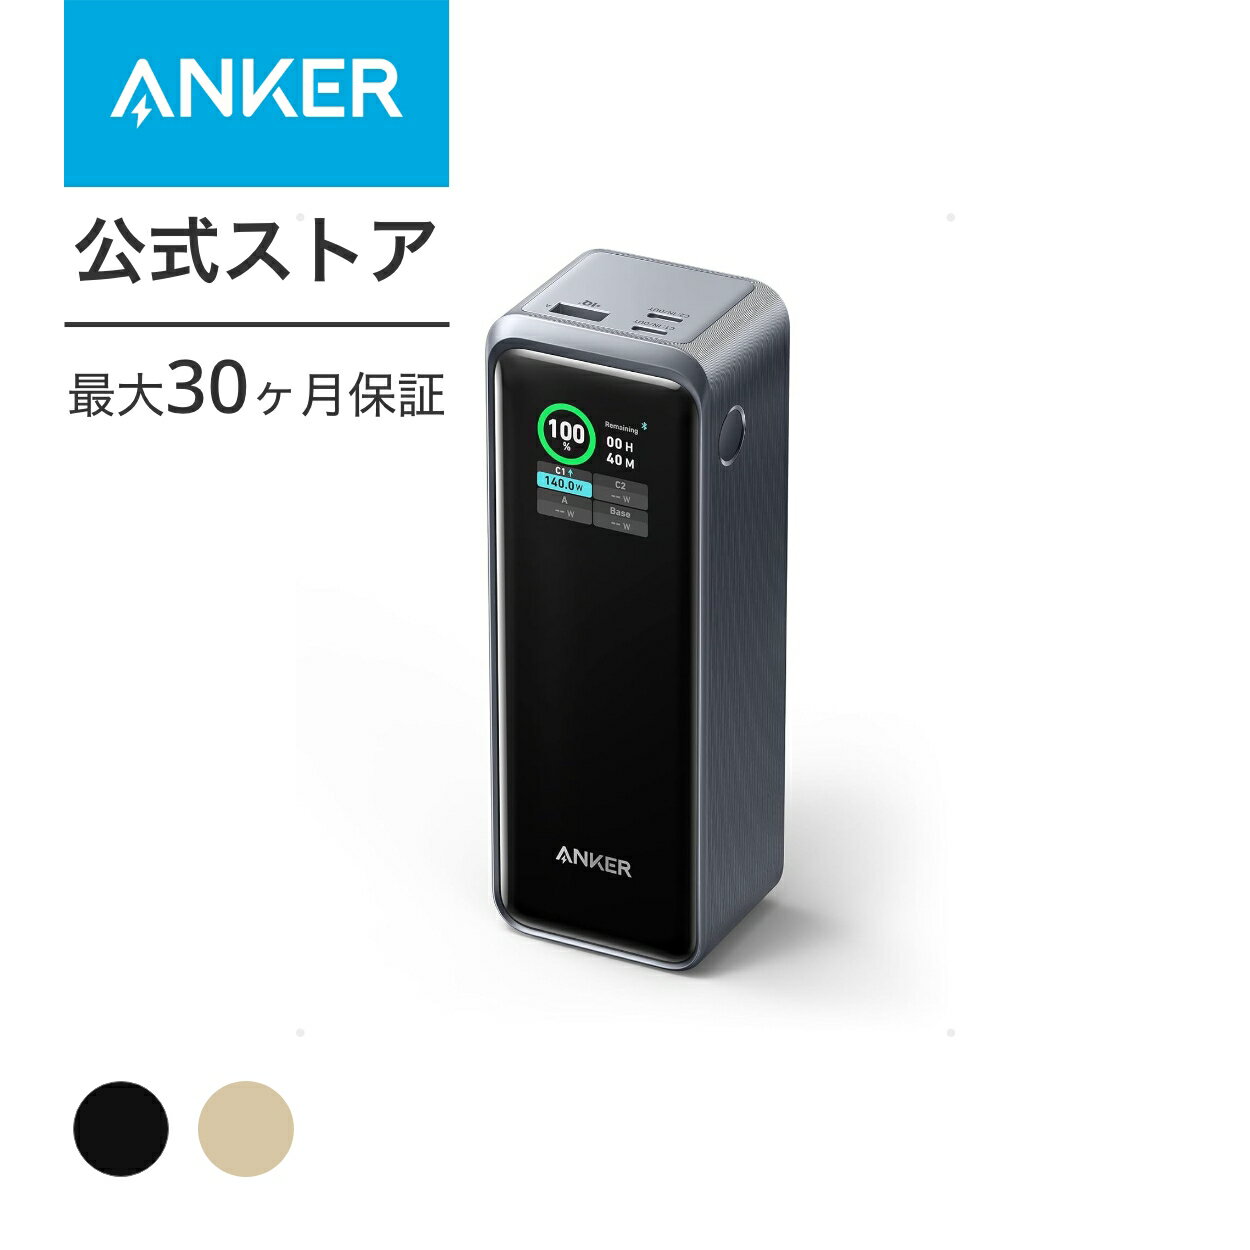 Anker Prime Power Bank (27650mAh, 250W) (モバイルバッテリー 27650mAh 合計250W出力 大容量 LEDディスプレイ搭載)iPhone MacBook Galaxy Android スマートフォン